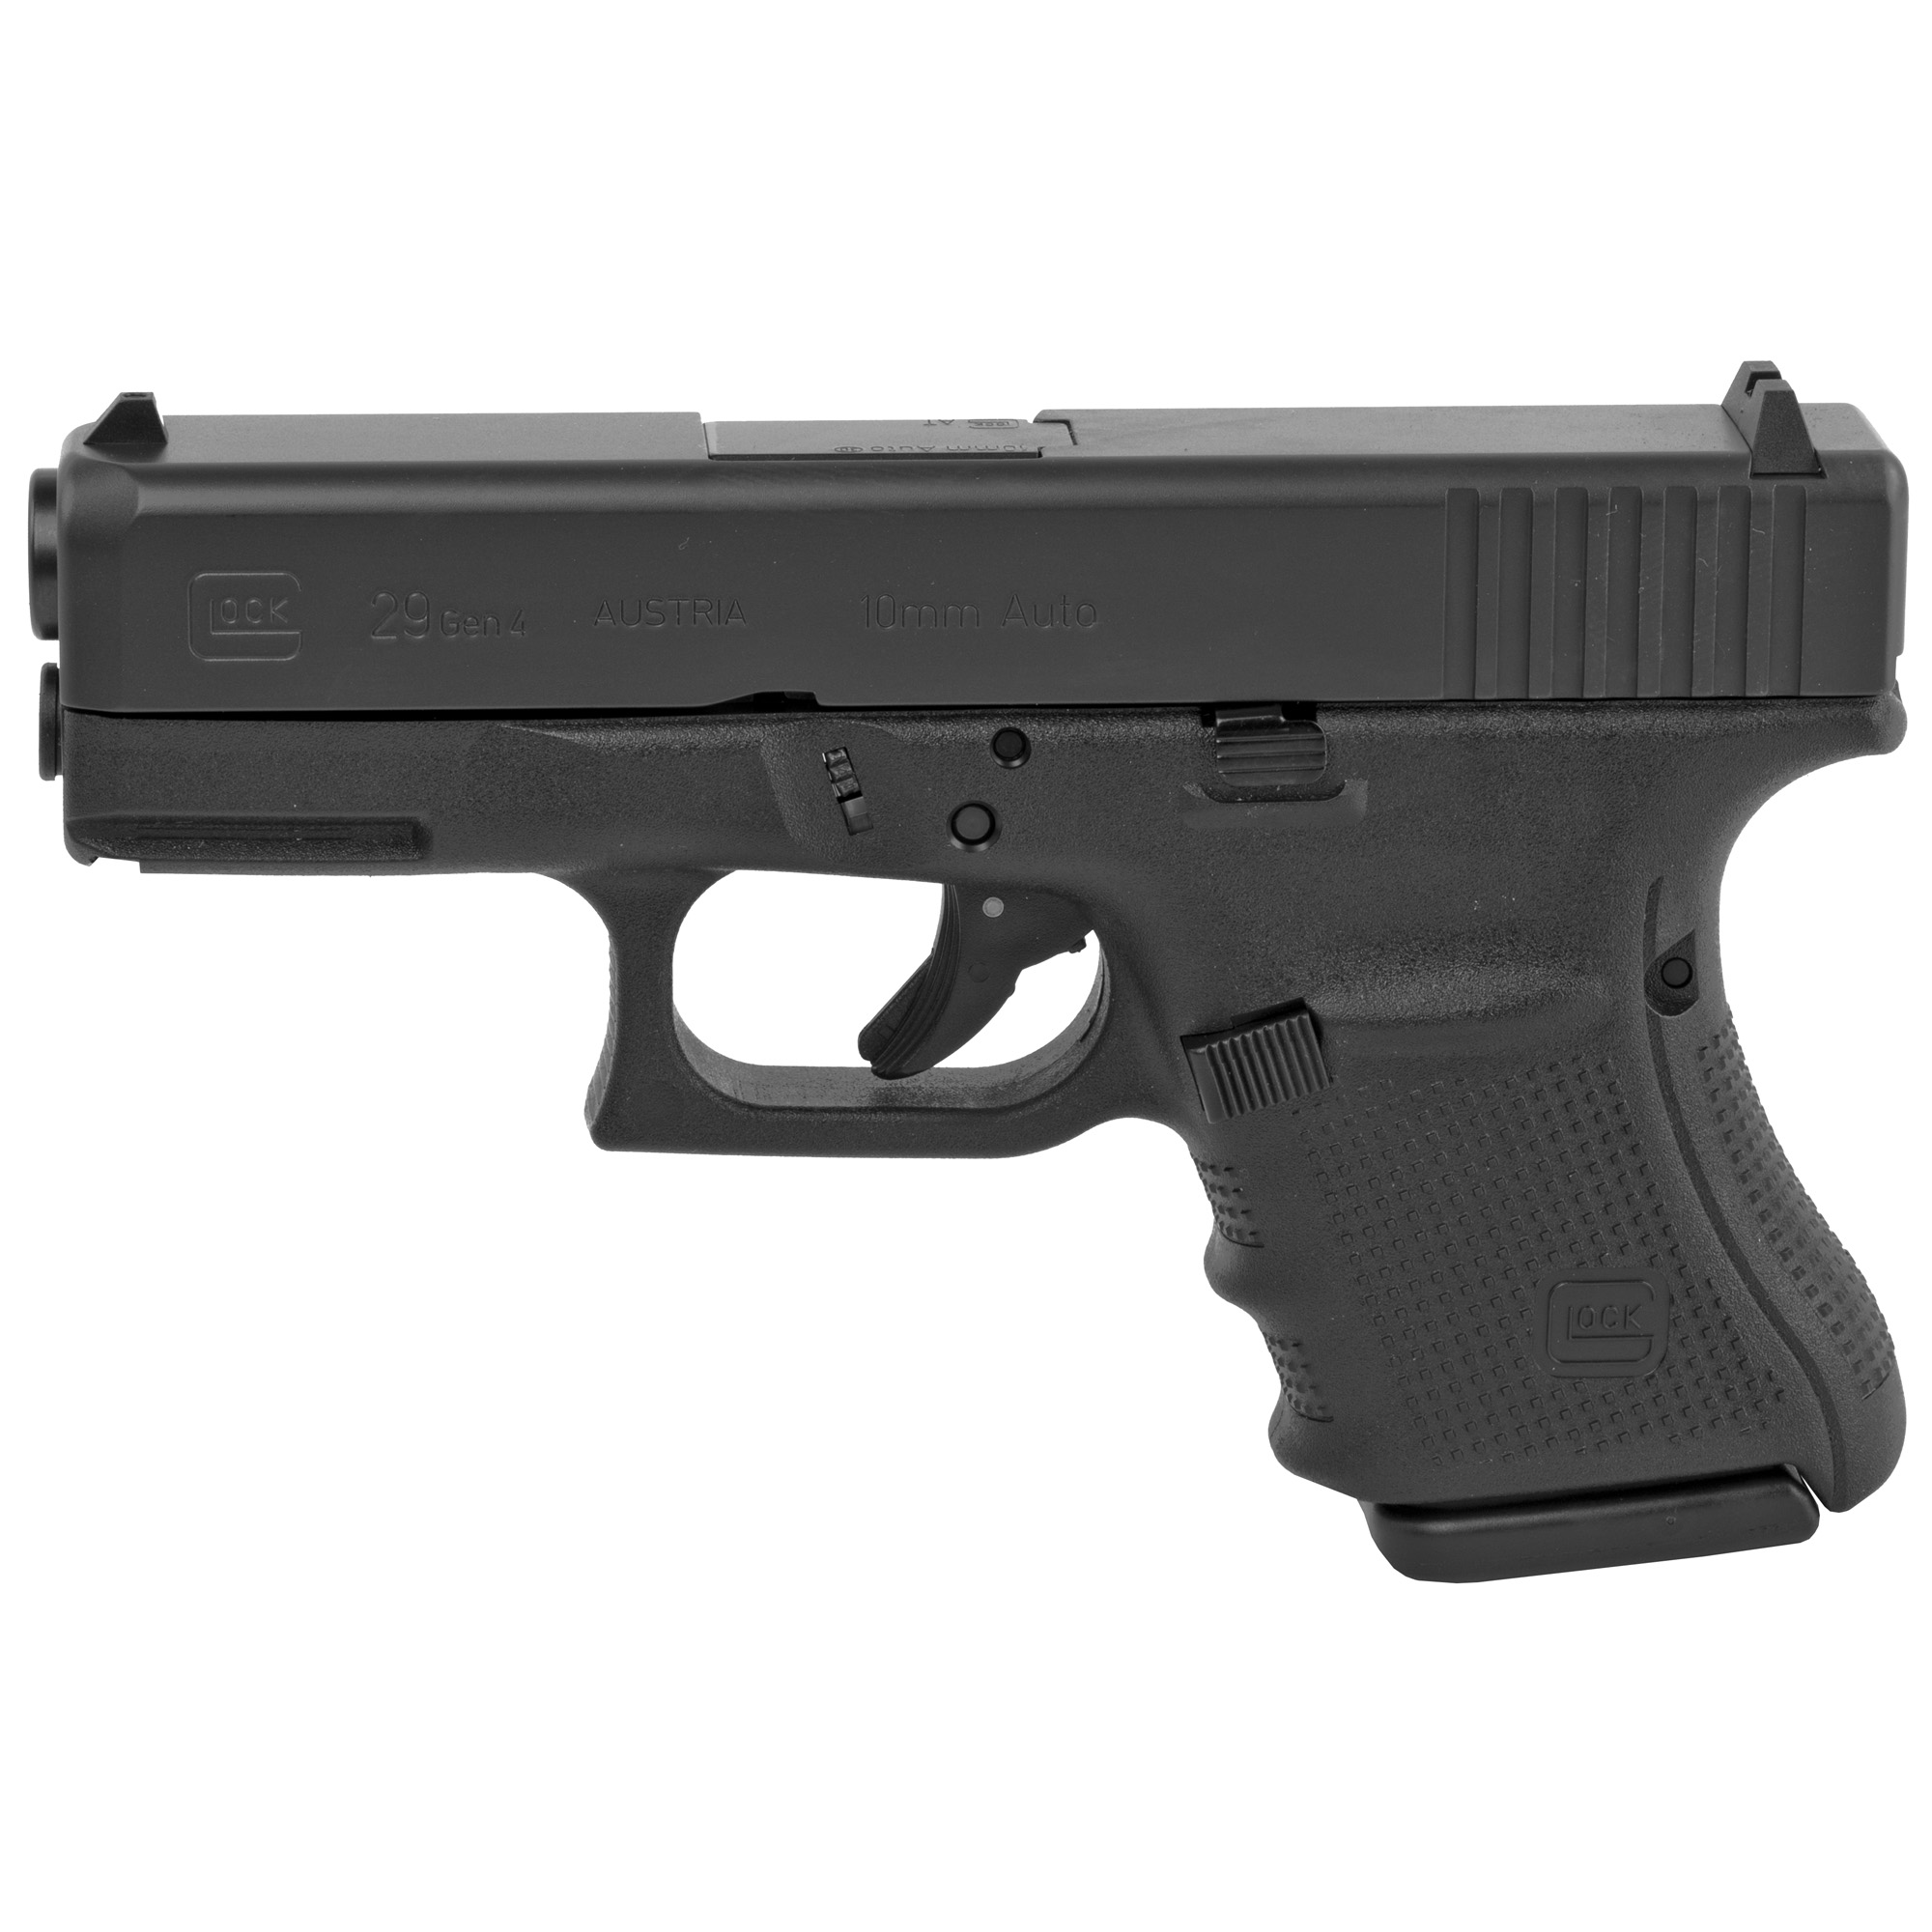 Glock G29 Gen4 Subcompact 10mm Pistol Blue/Black, 3.77" Barrel, 10+1 Rounds, Polymer Grips, 3-Dot Sights (PG2950201) 764503752